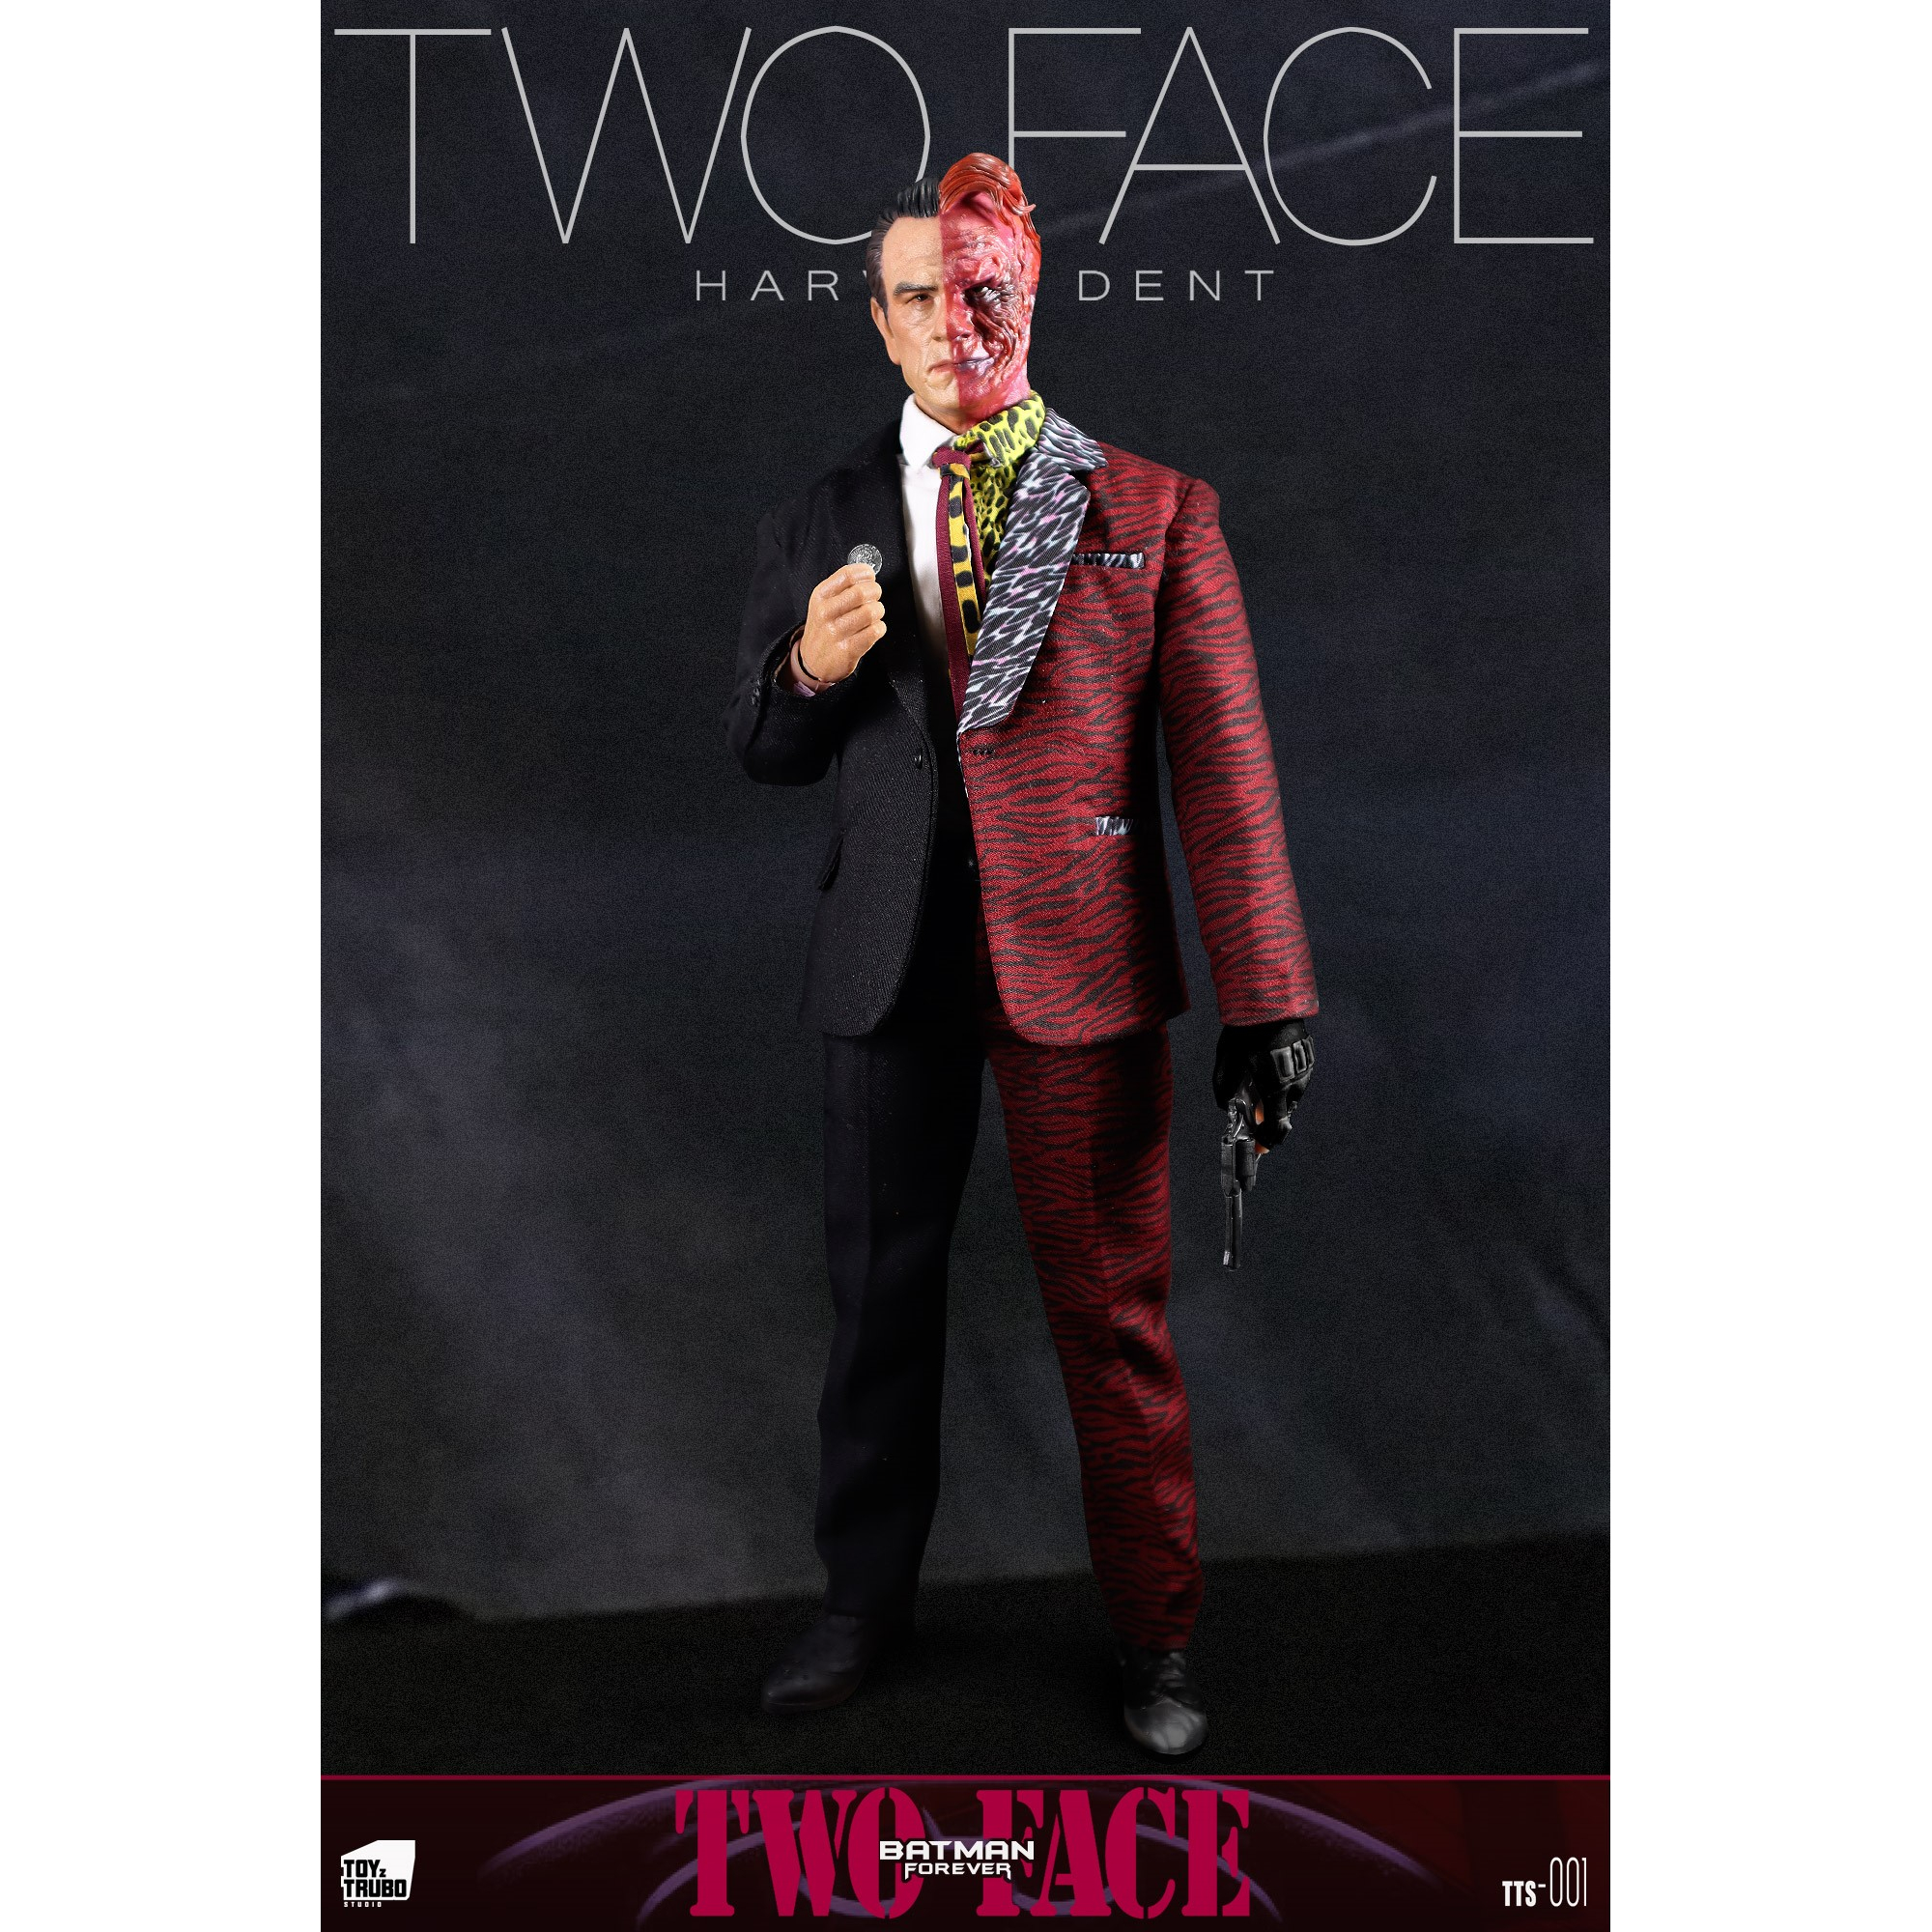 DC Two Face Harvey Dent (Batman Forever) 1:6 Scale Figure Toyz Trubo Studio  TTS-001